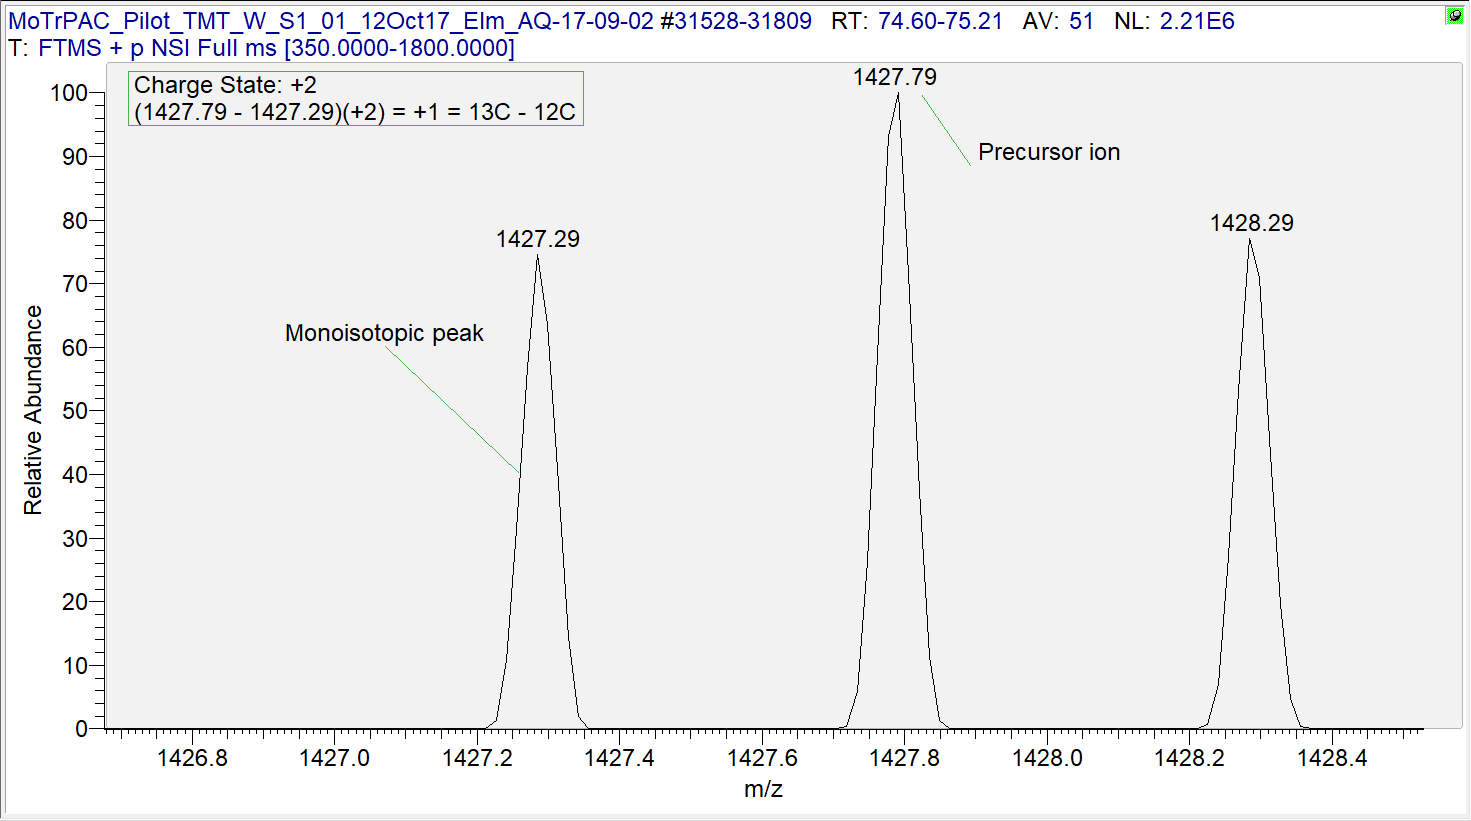 MS1 spectra with peak at non-monoisotopic precursor ion.